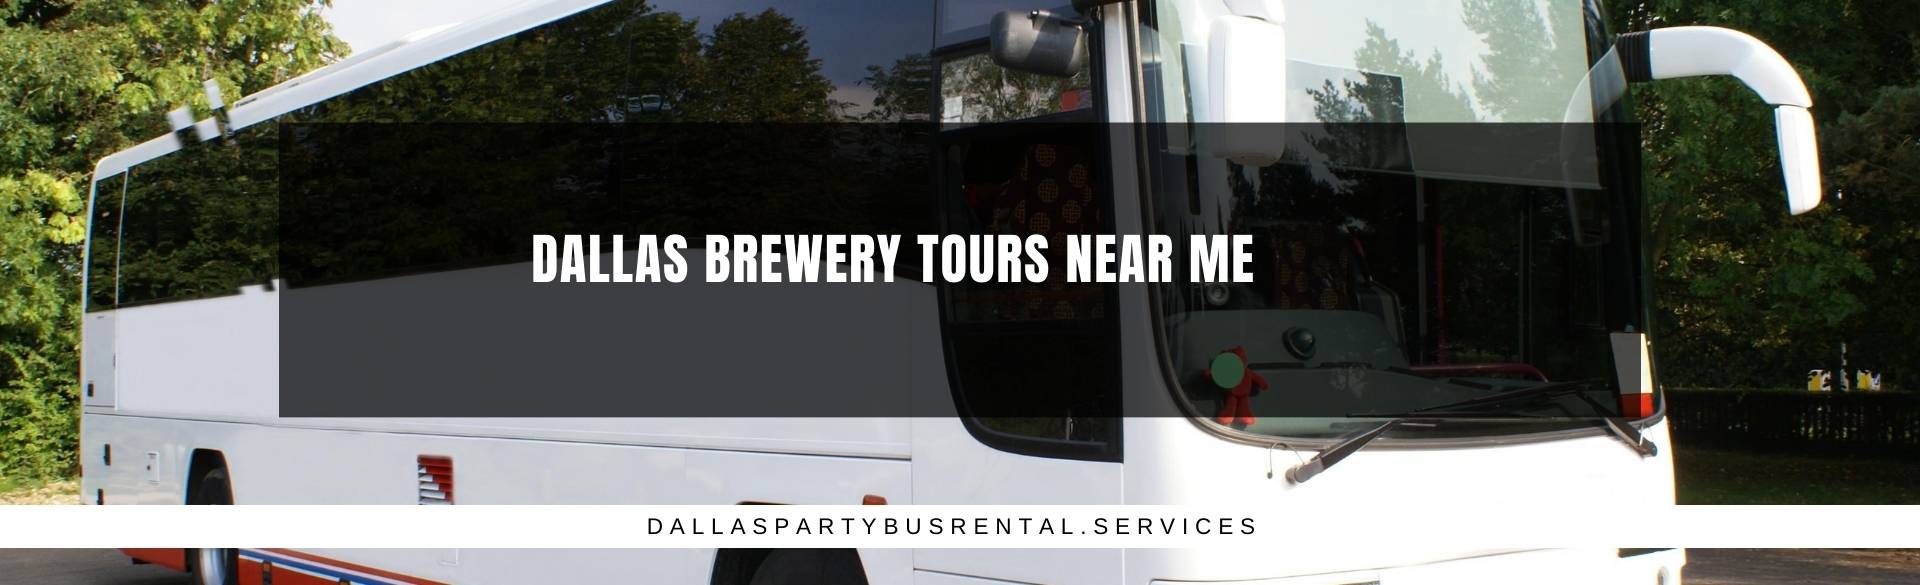 Dallas Brewery Tours Near Me